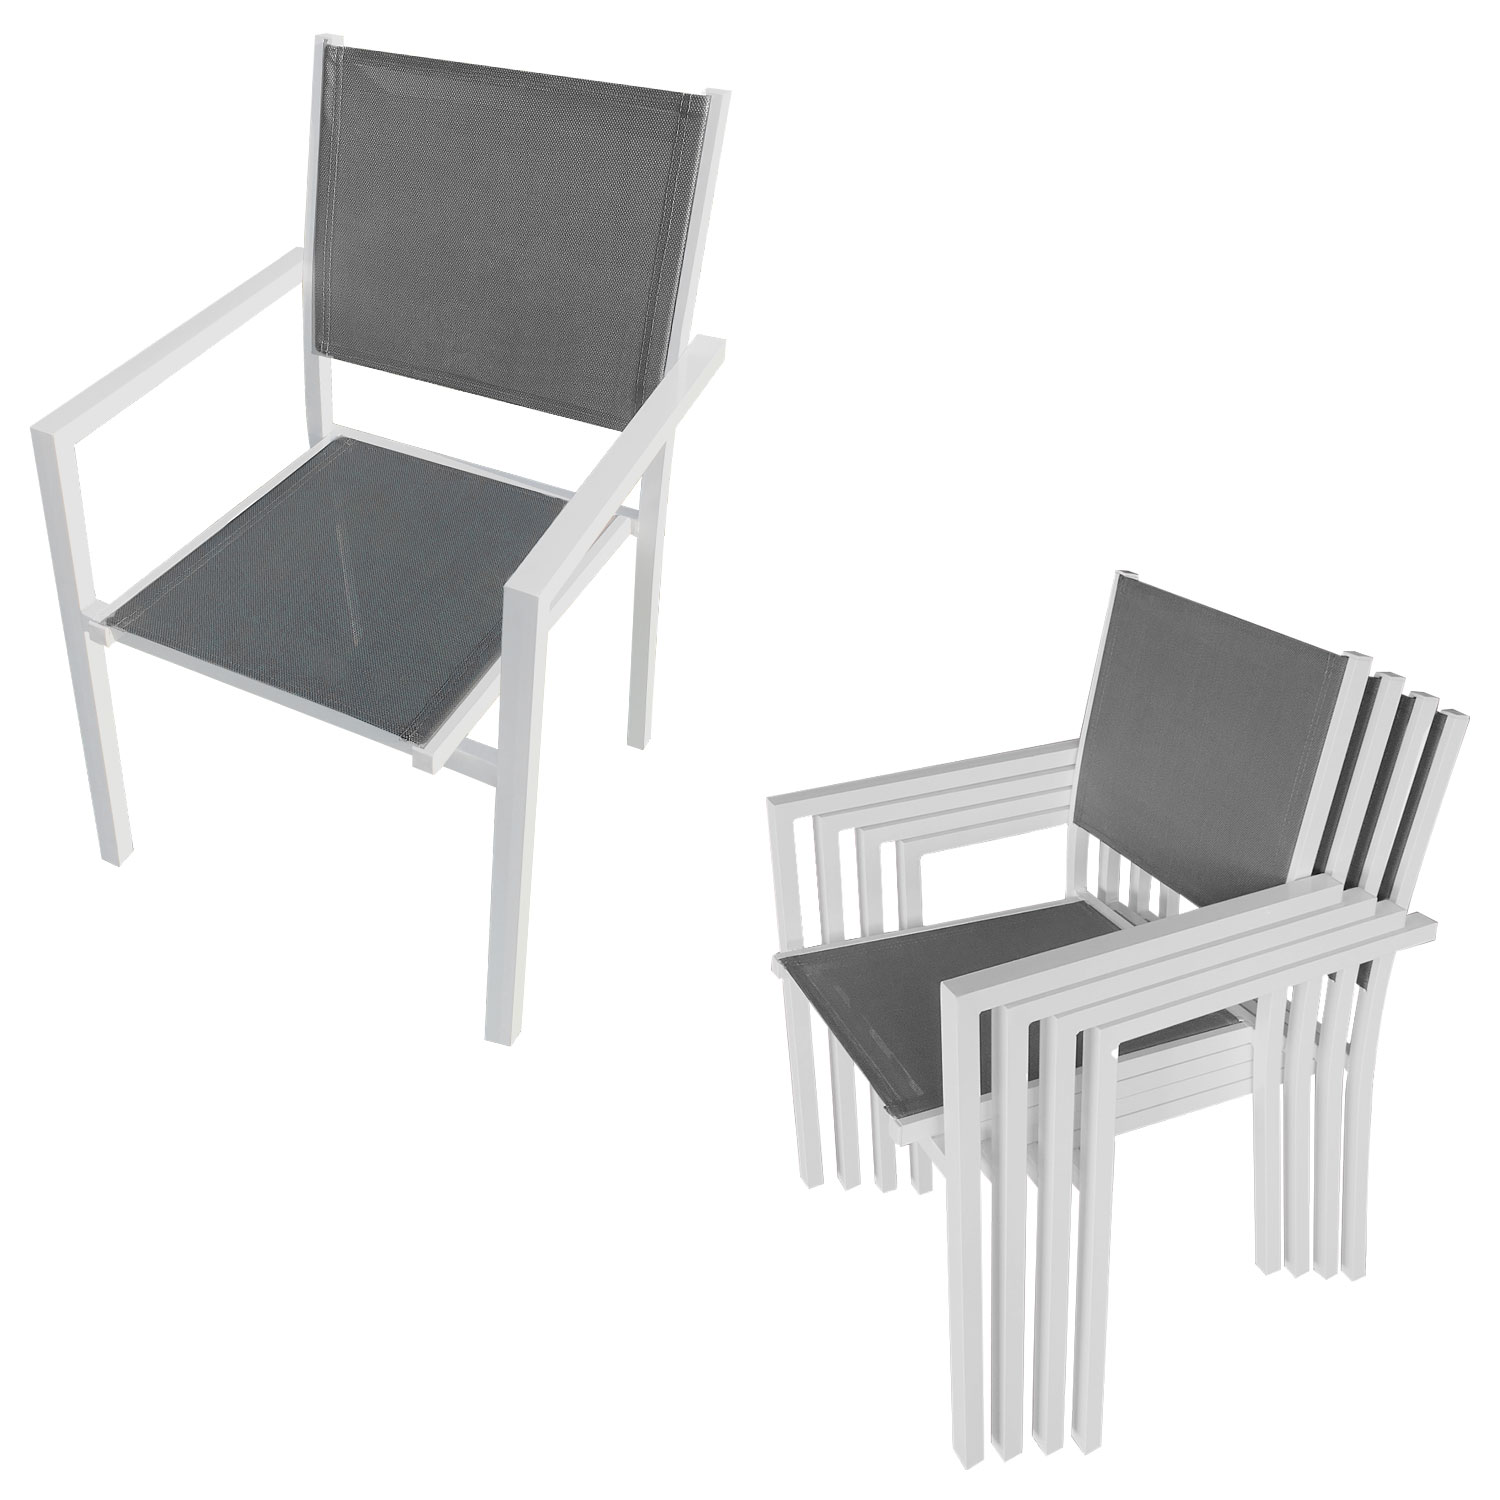 Gartenmöbel CAGLIARI aus grauem Textilene, 8 Sitzplätze - Weißaluminium